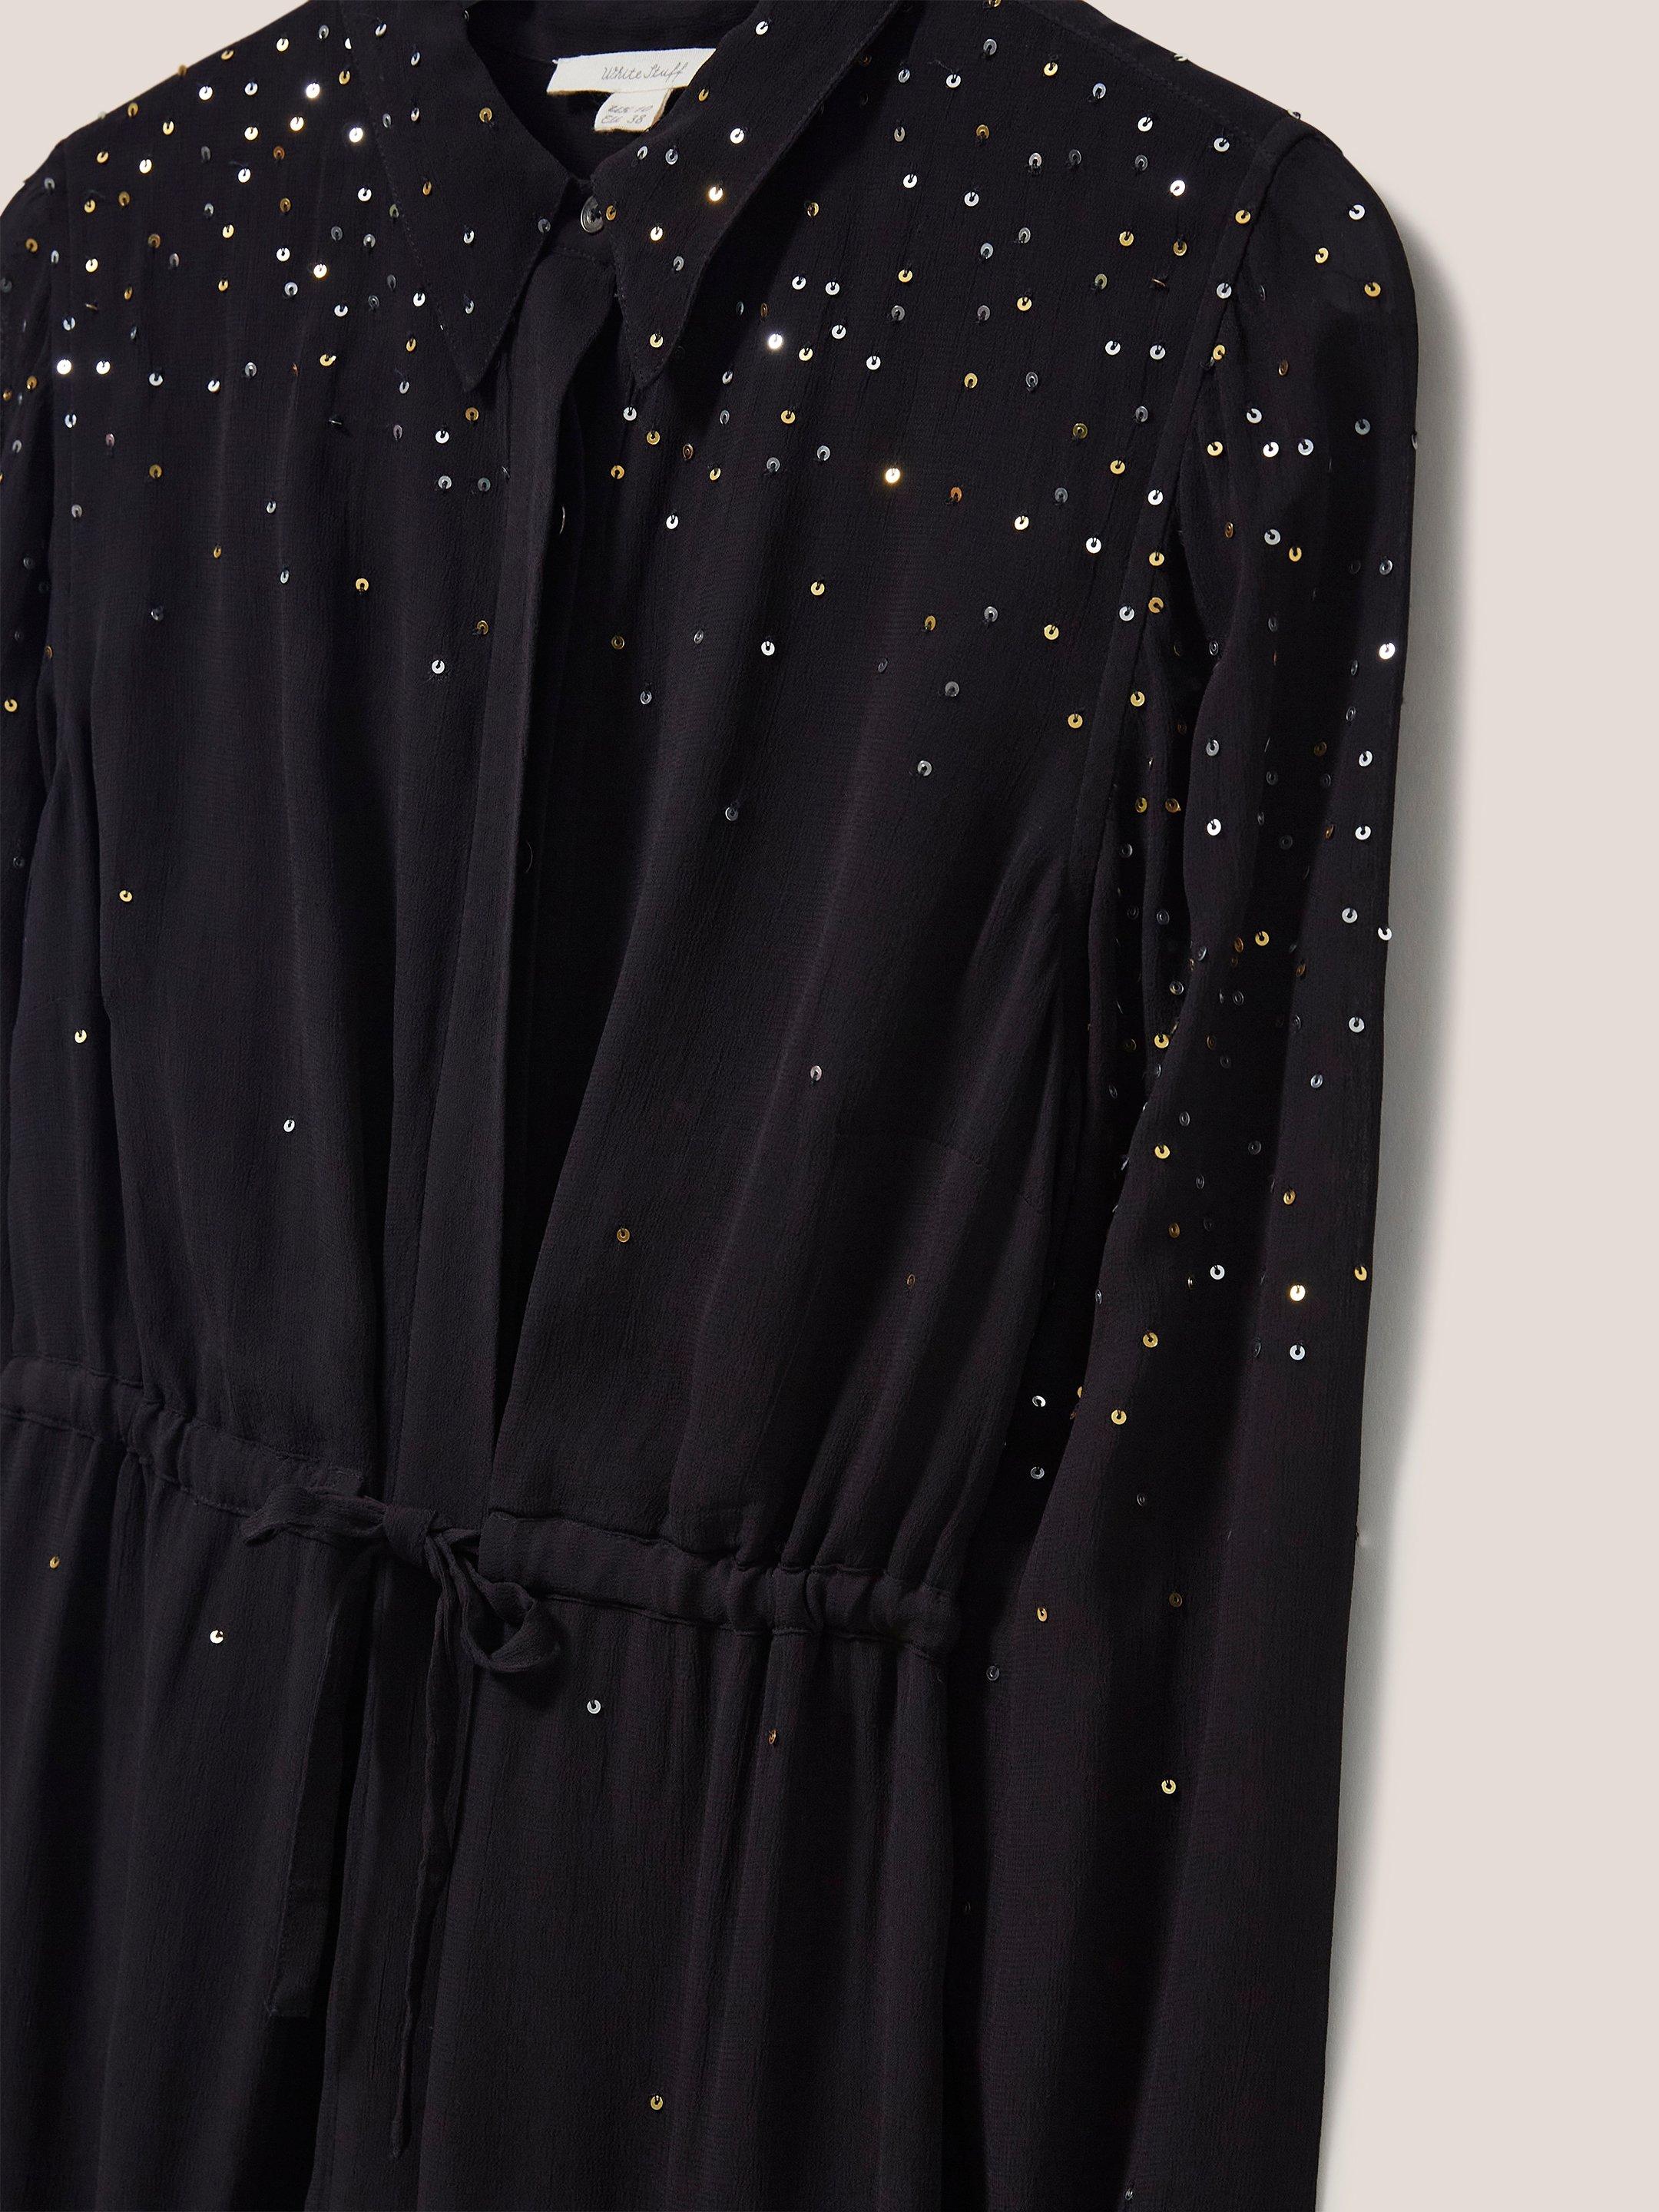 Celine Sequin Shirt Dress in BLK MLT - FLAT DETAIL